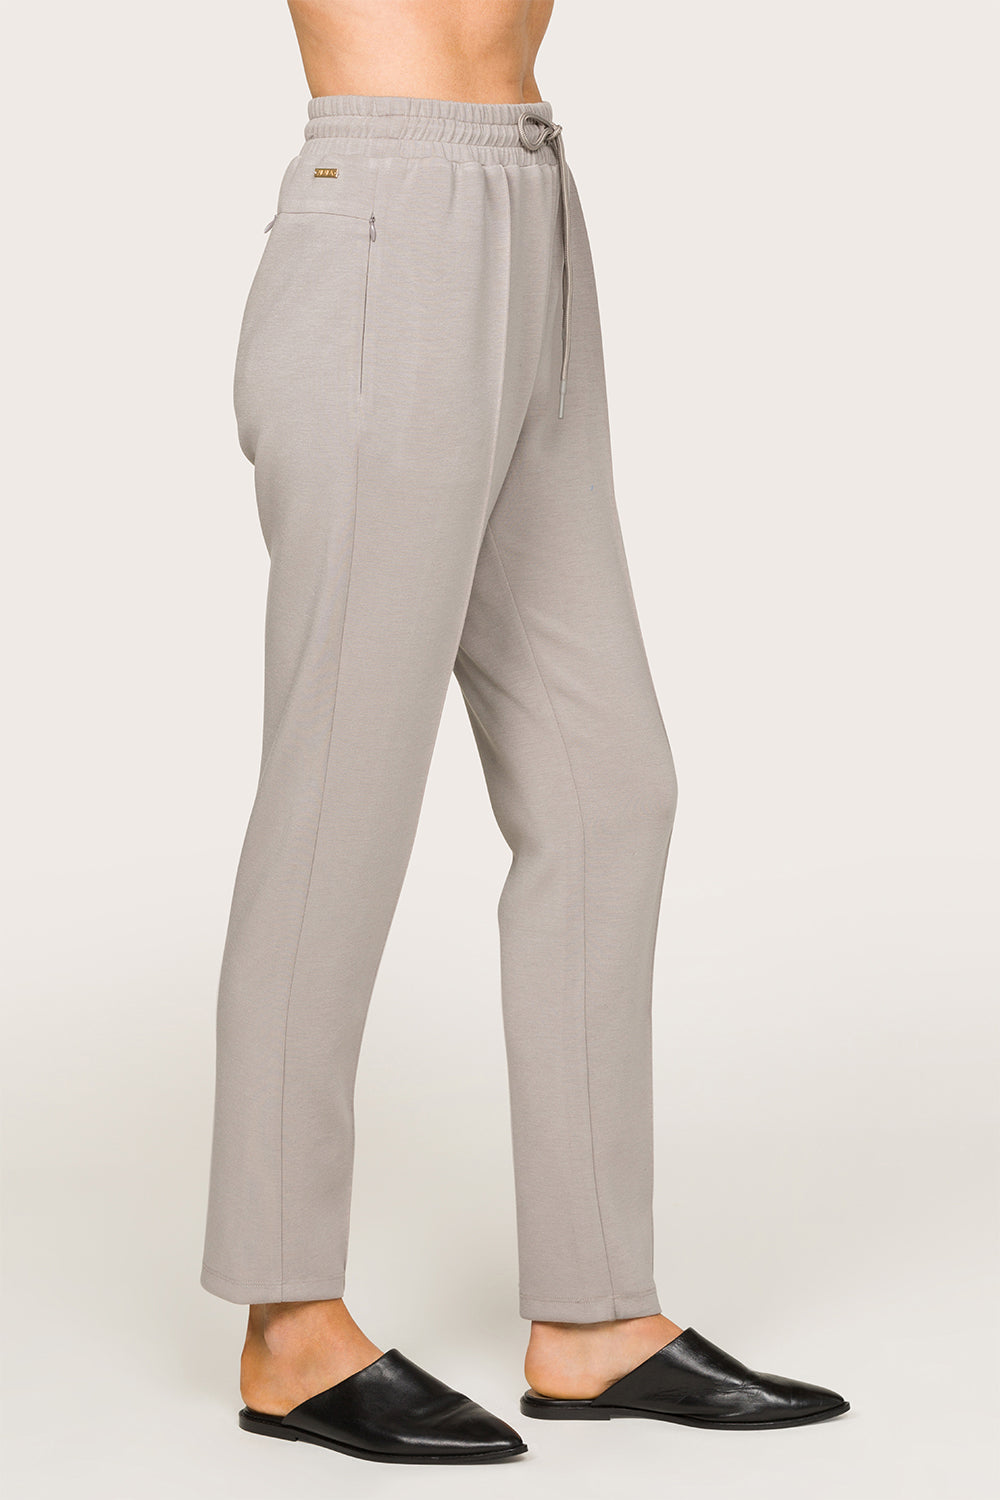 Alala women's comfortable jogger pant in grey